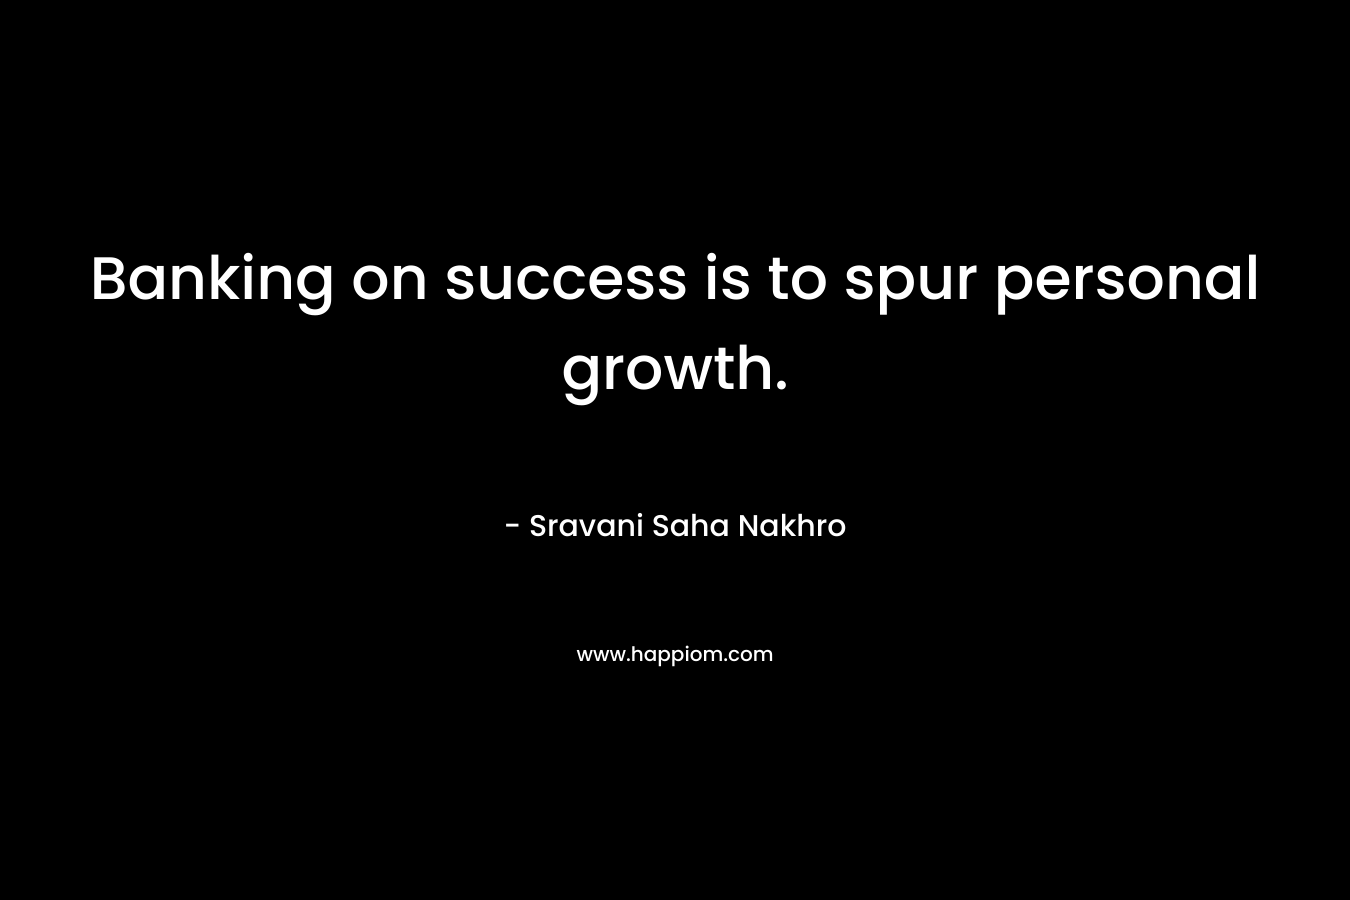 Banking on success is to spur personal growth. – Sravani Saha Nakhro